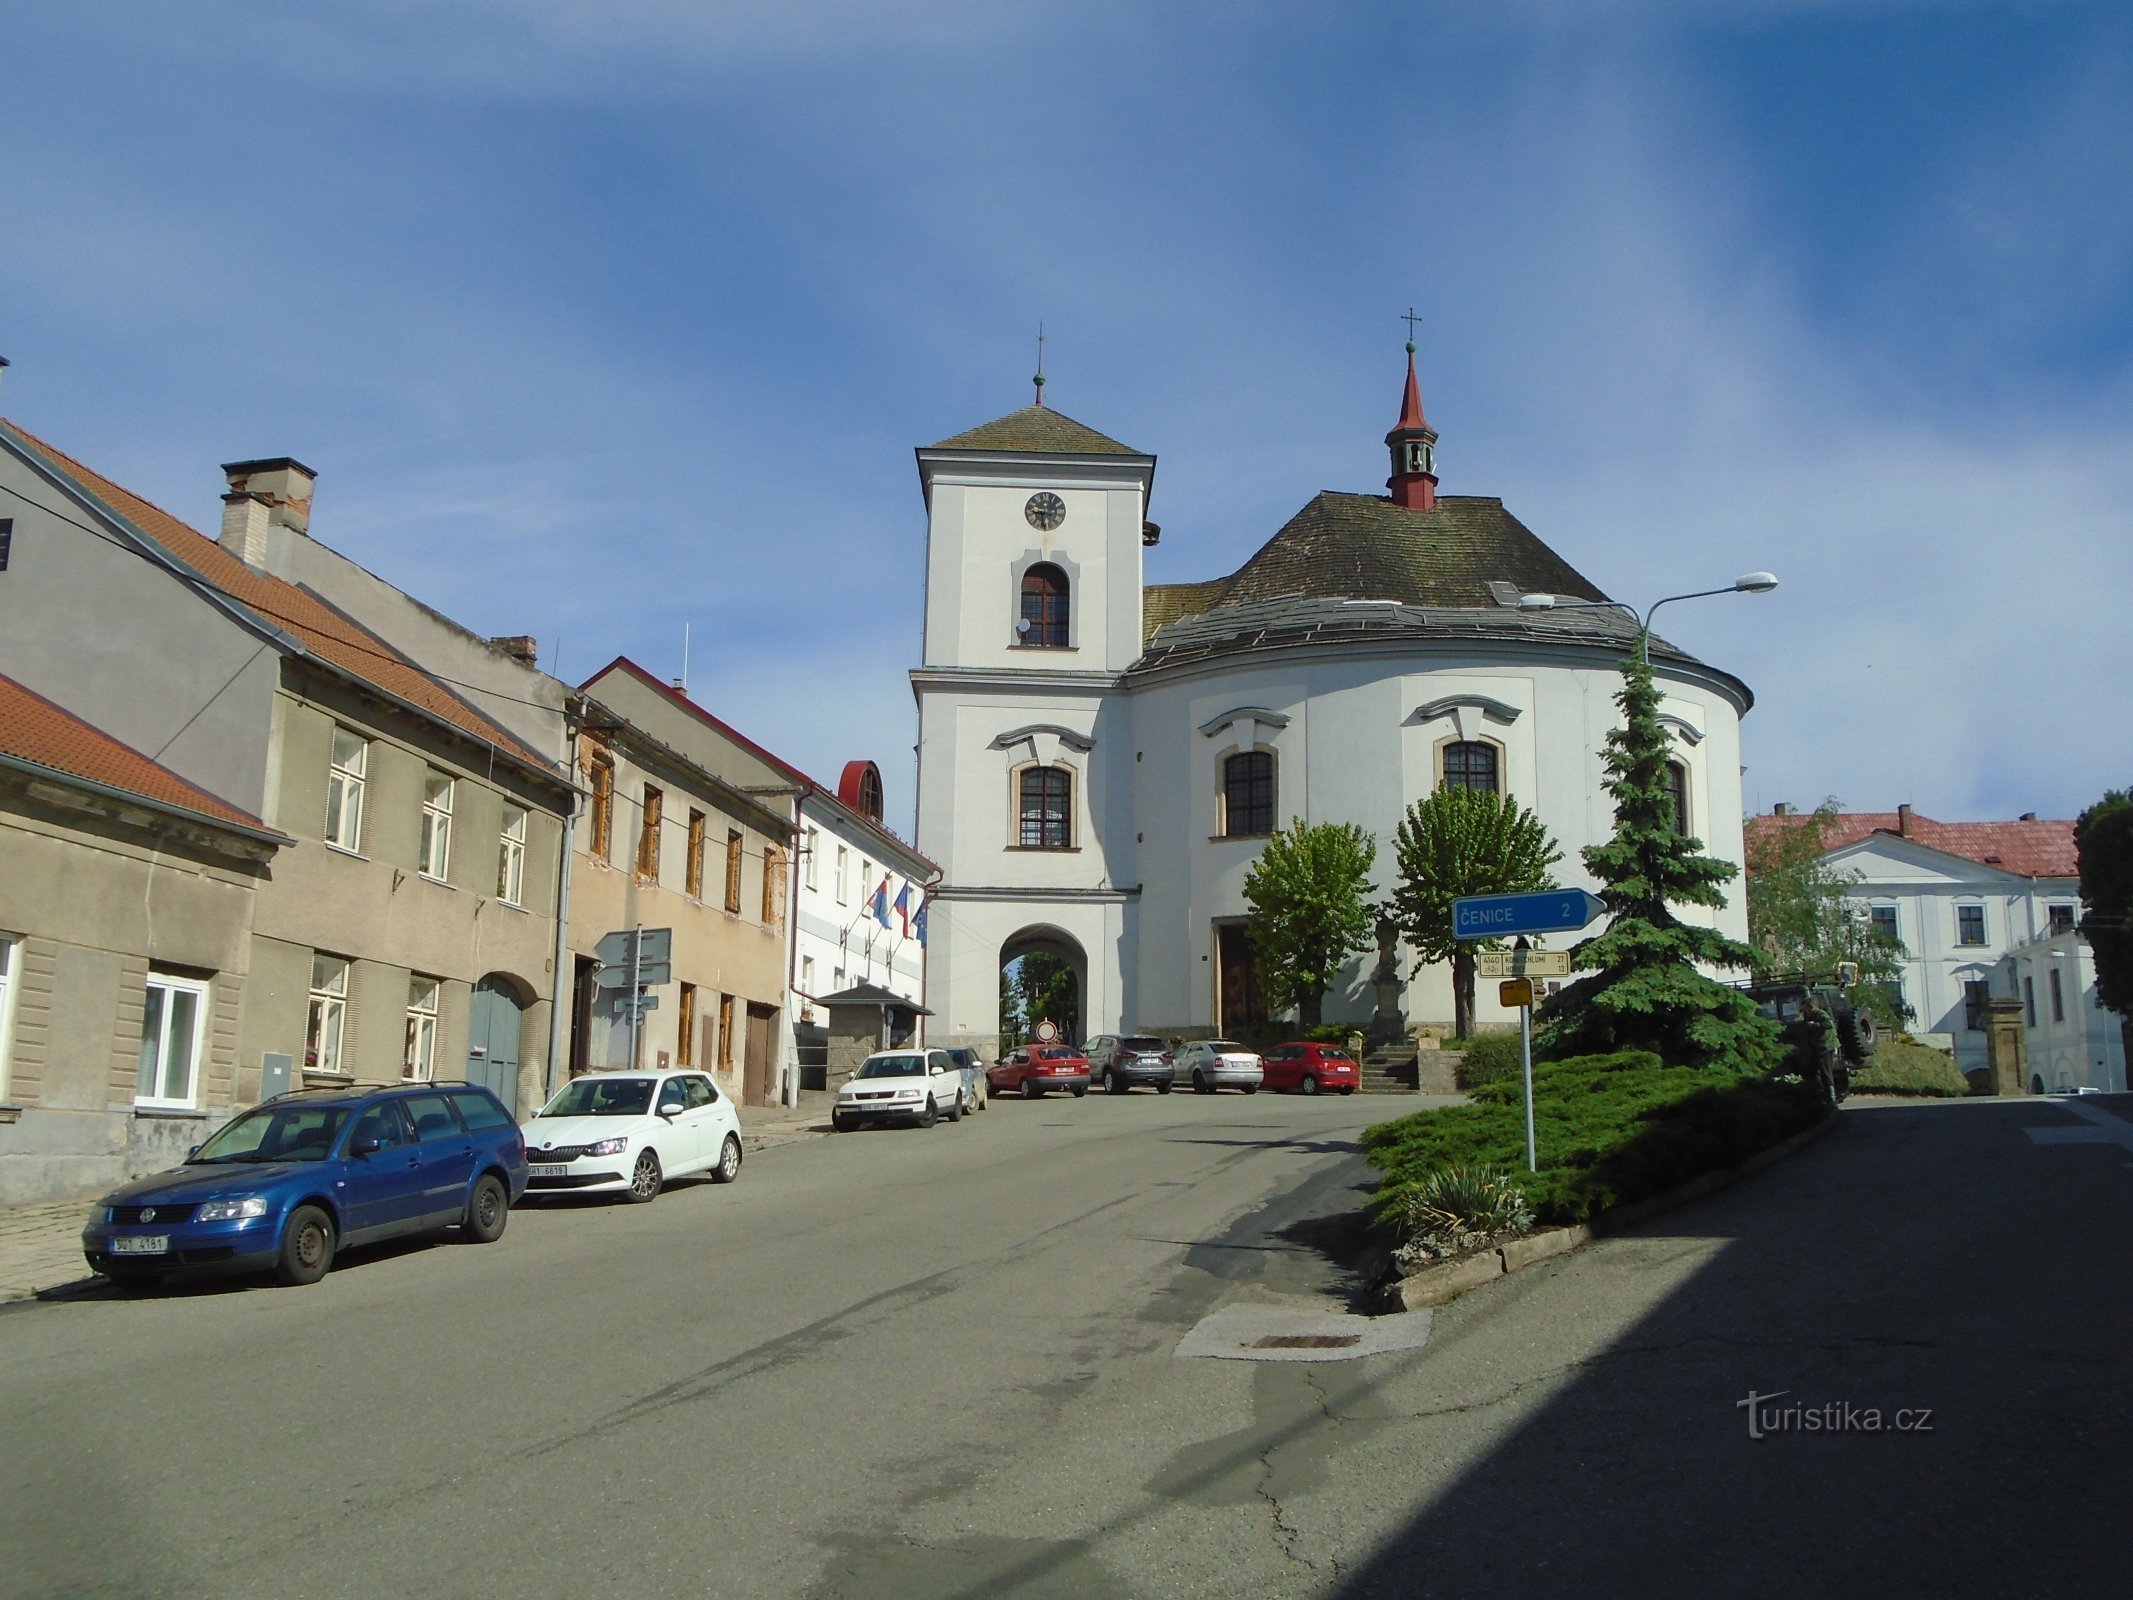 Piața din fața bisericii (Cerekvice nad Bystřicí)